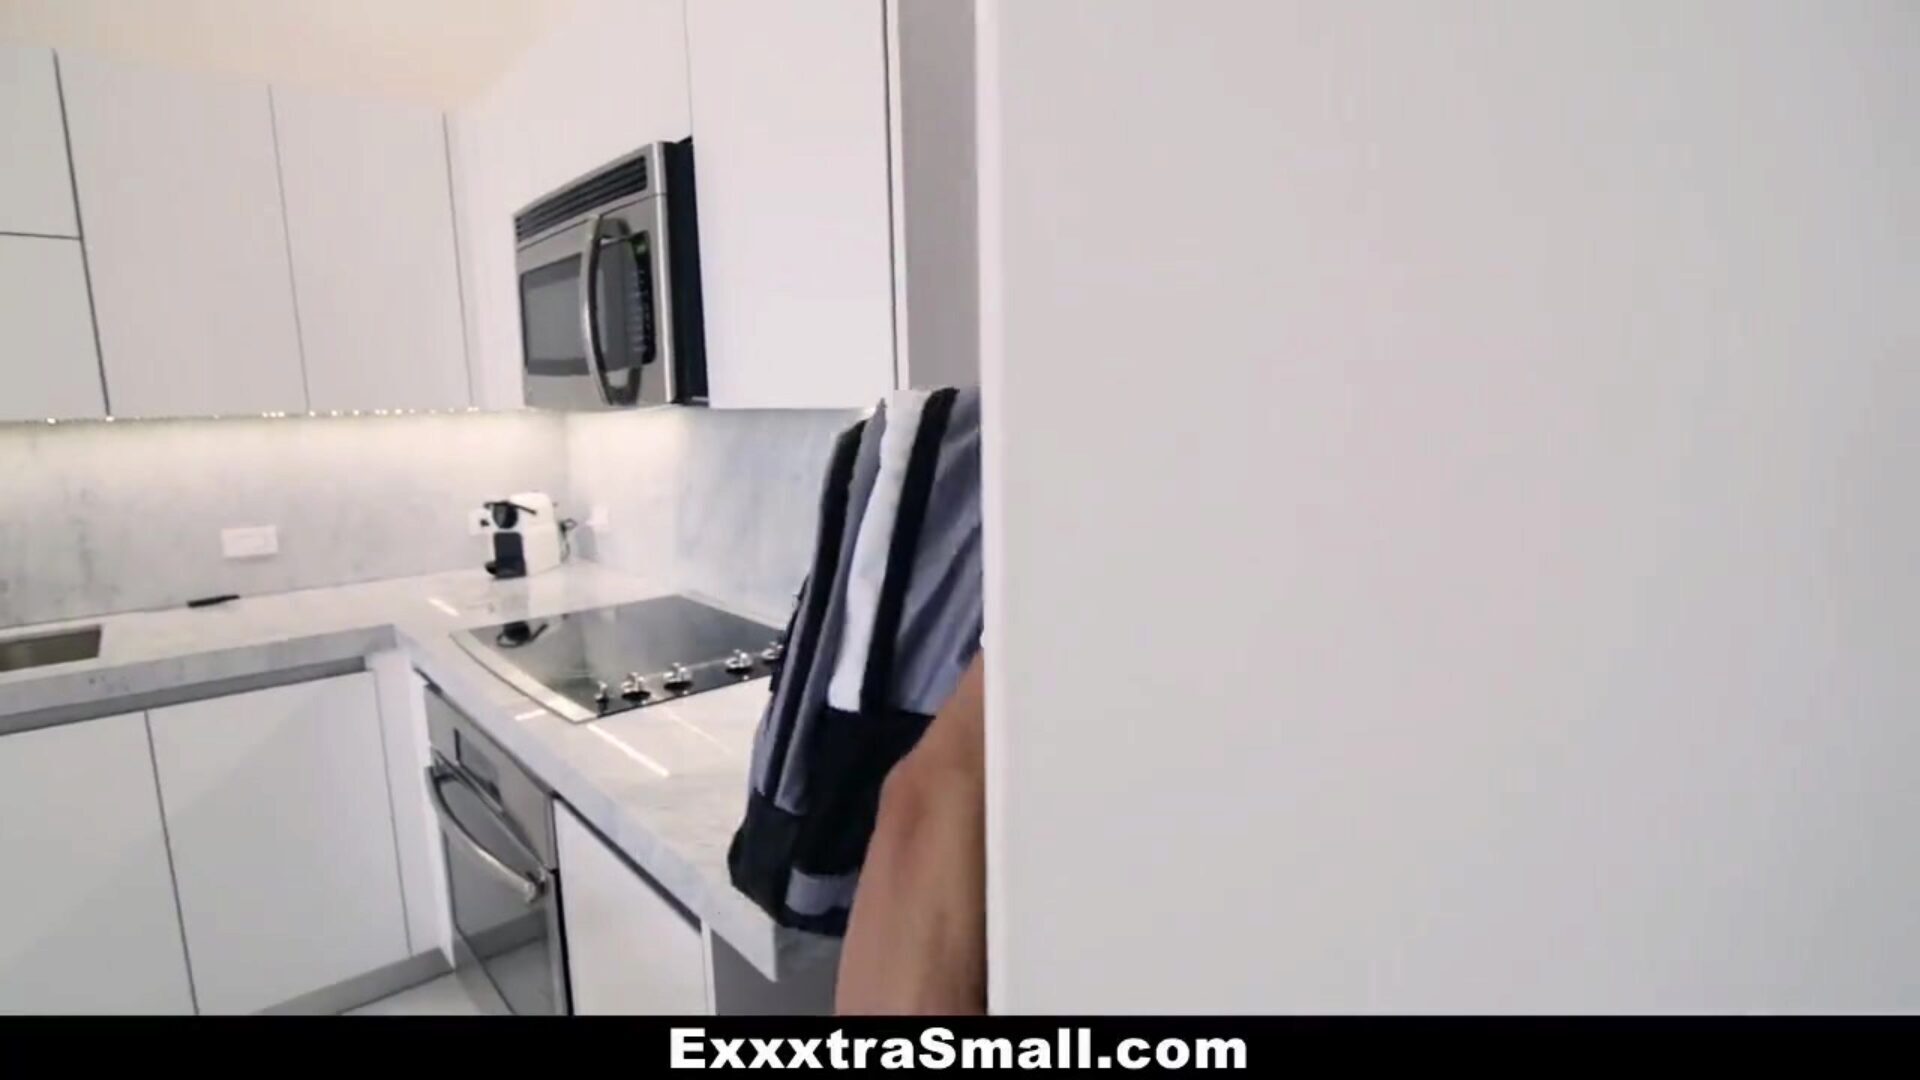 exxxtrasmall - πώς να πιάσεις και να γαμήσεις ένα pikachu